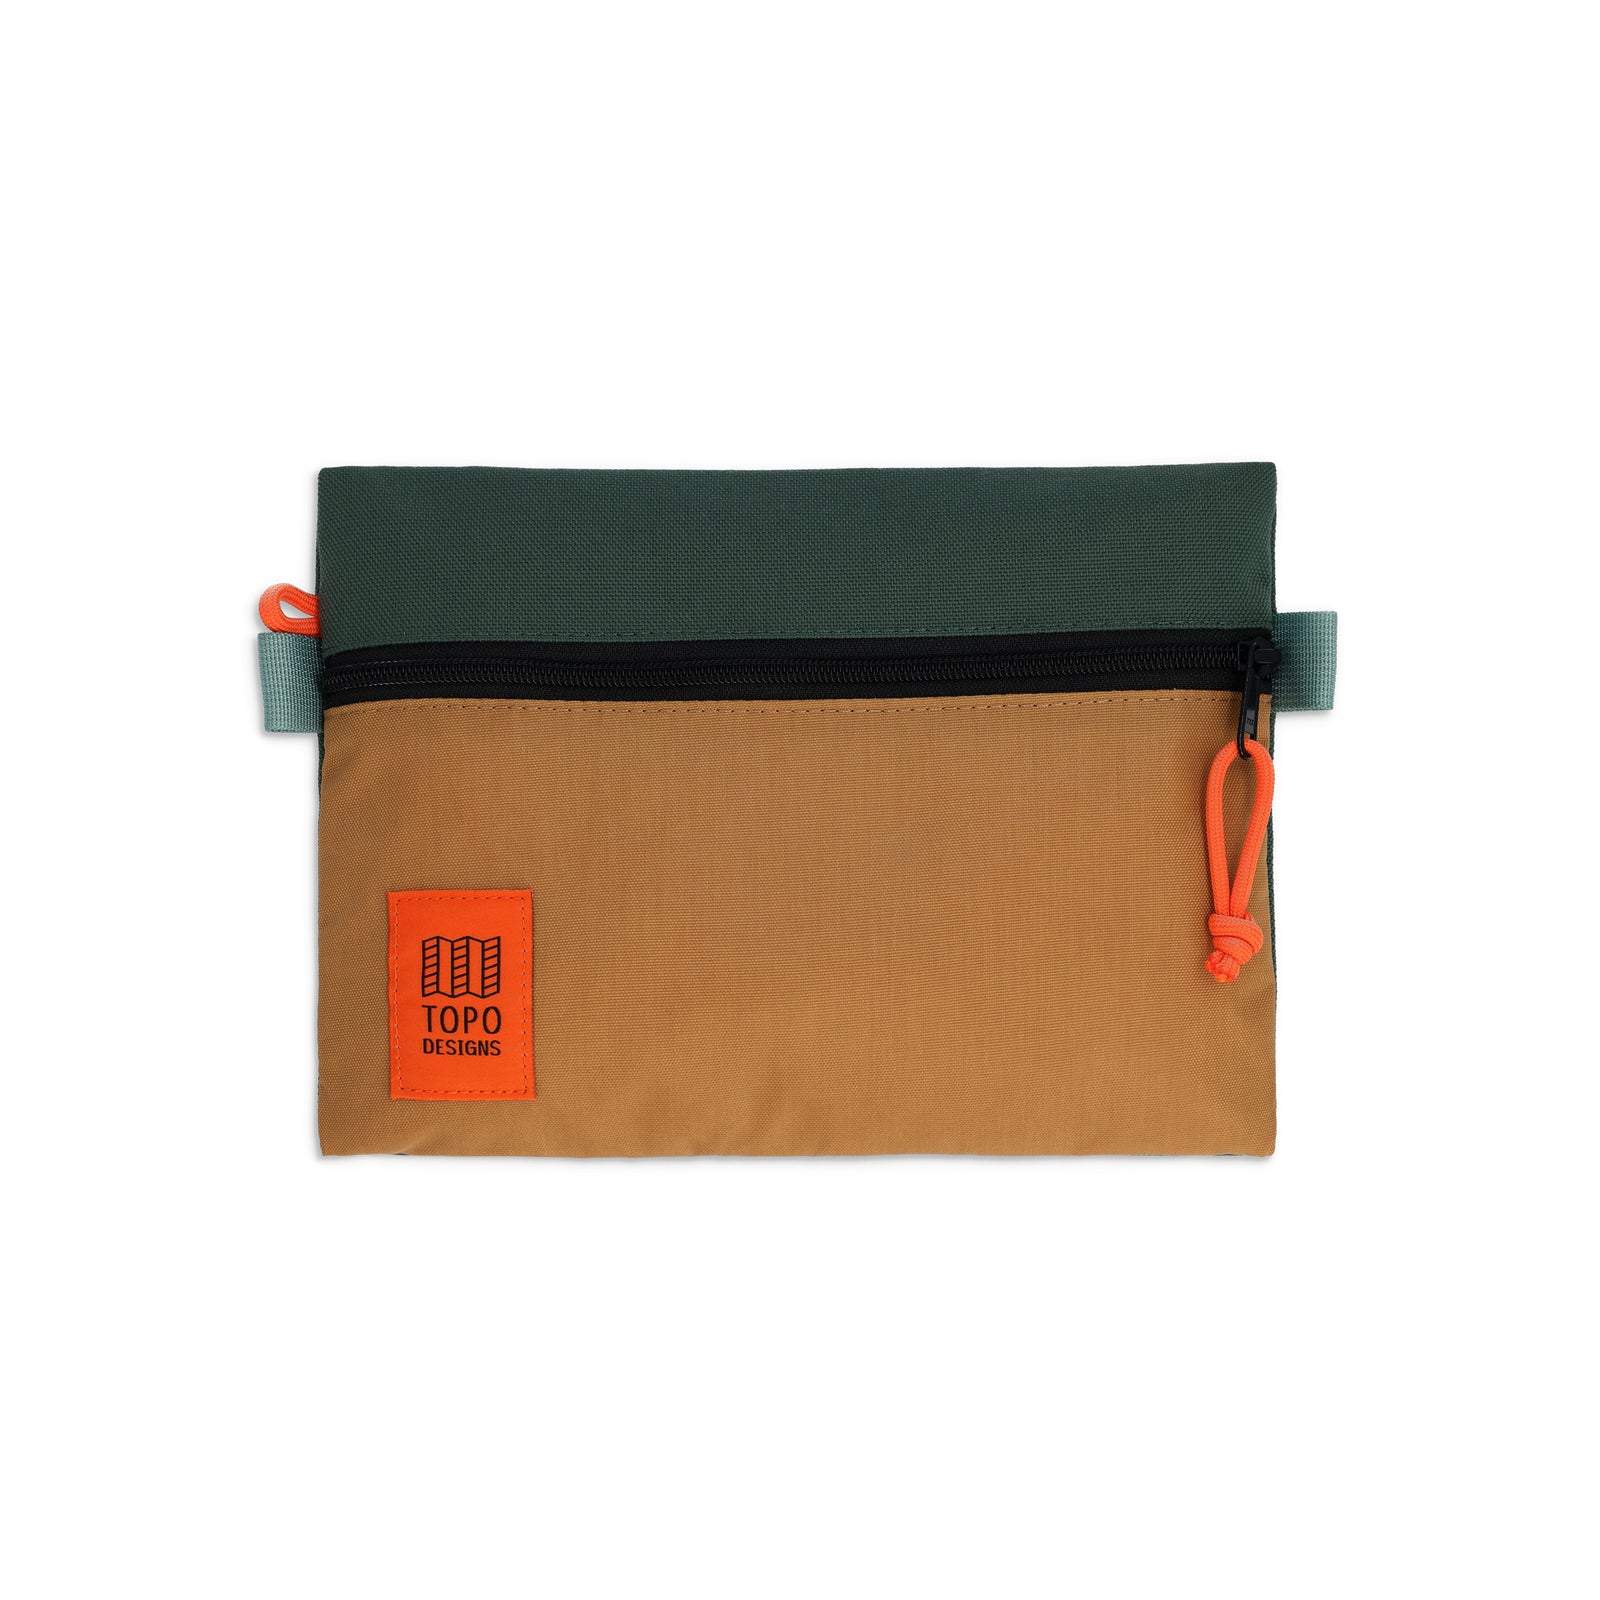 Topo Designs Accessory Bag "Medium" in "Khaki / Forest"